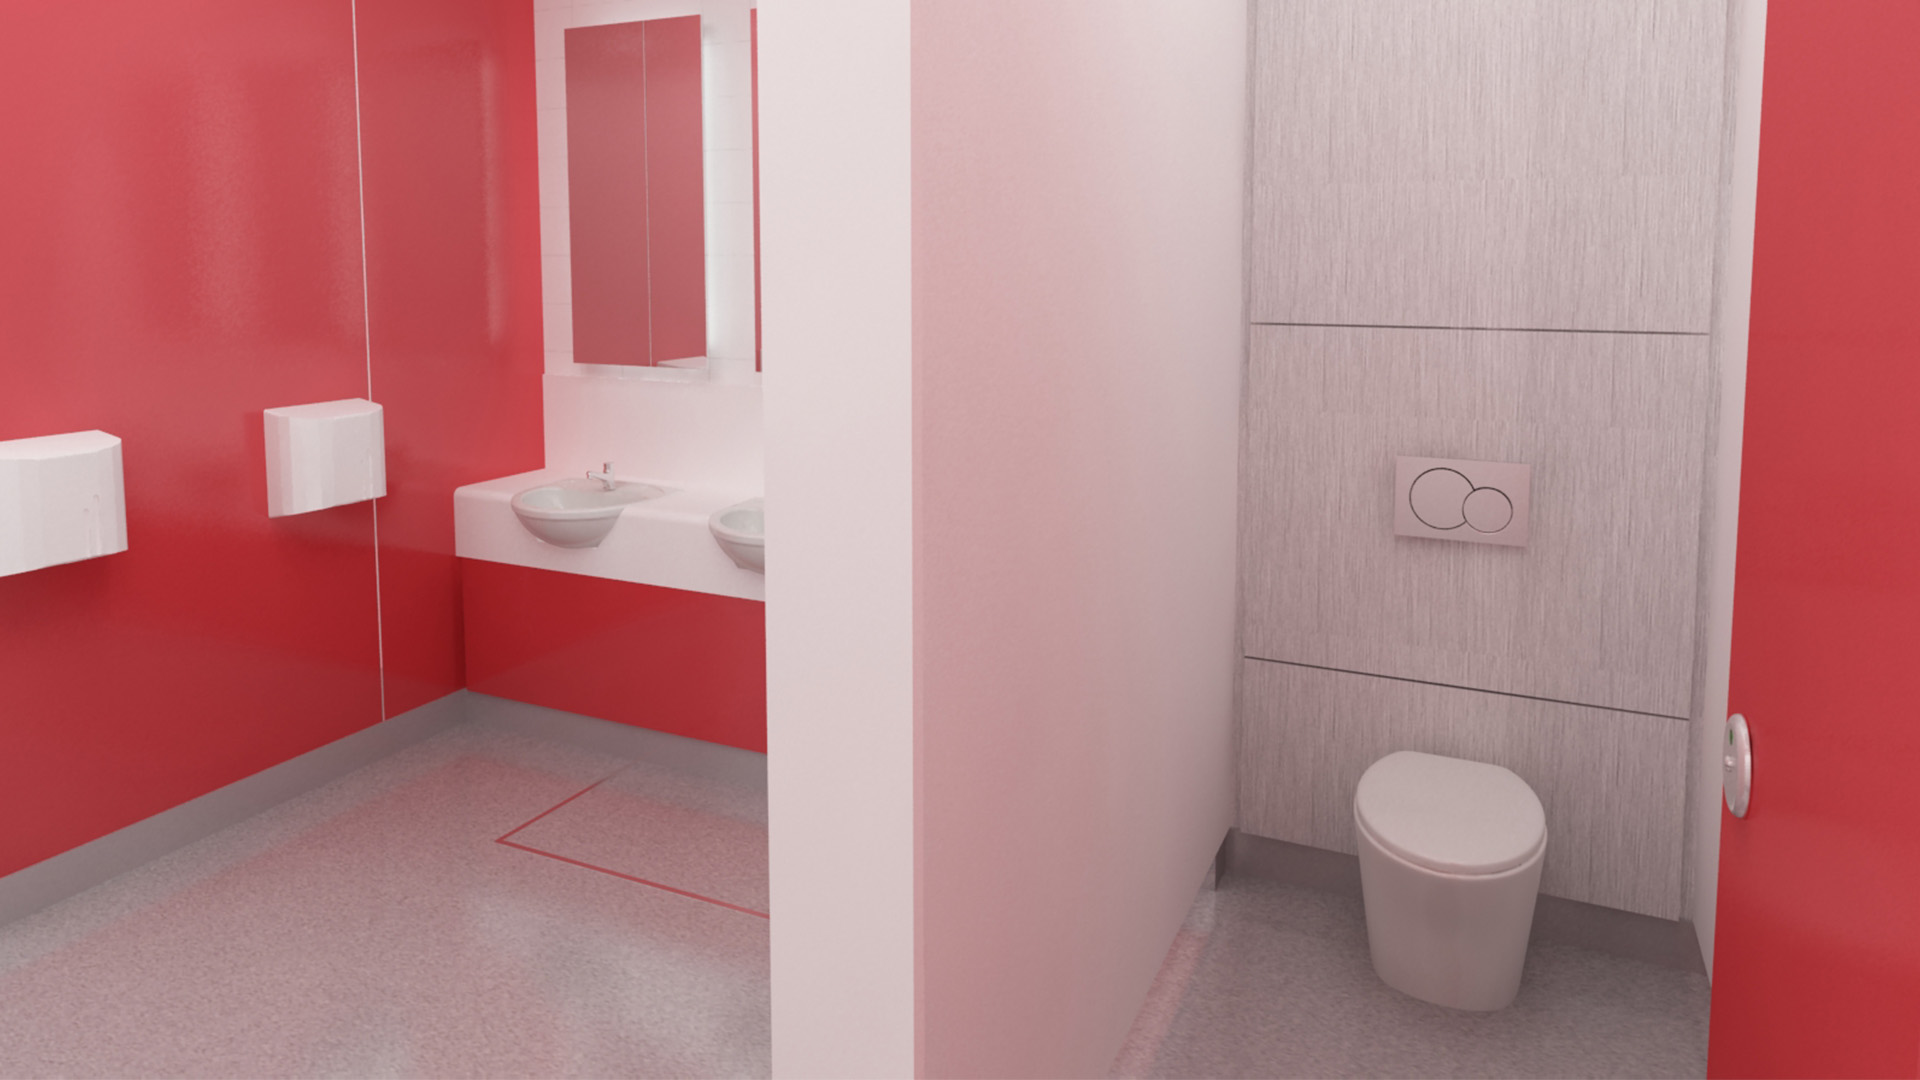 Stevens Washrooms - Commercial Washrooms Cubicles Urinals Installation Refurbishment - Restaurant Toilets and Washrooms